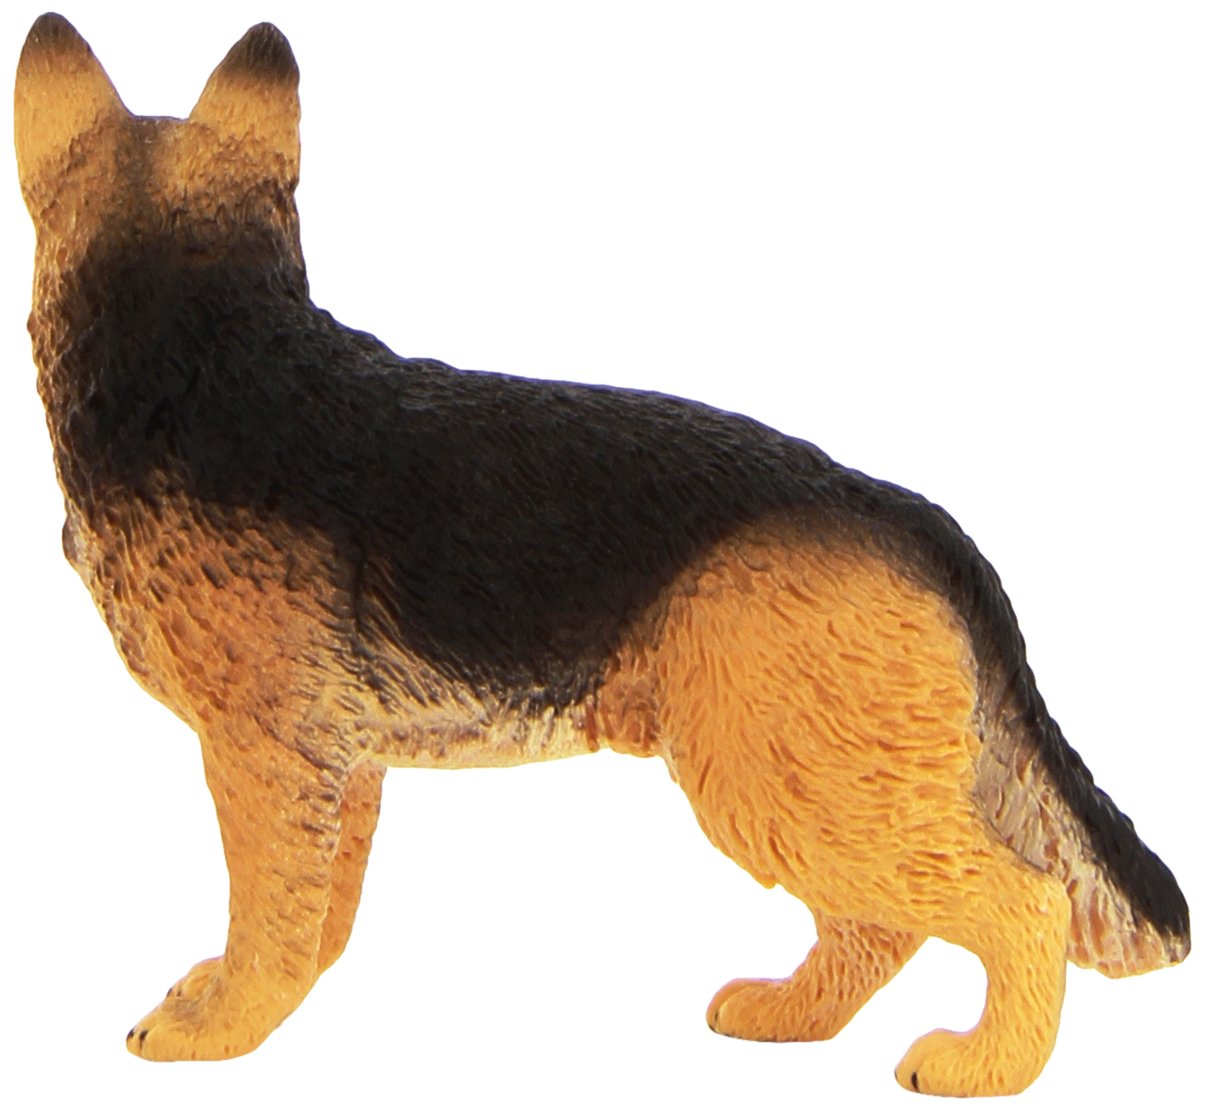 Schleich Farm World, Realistic Animal Toys for Boys and Girls, German Shepherd Dog Toy Figurine, Ages 3+